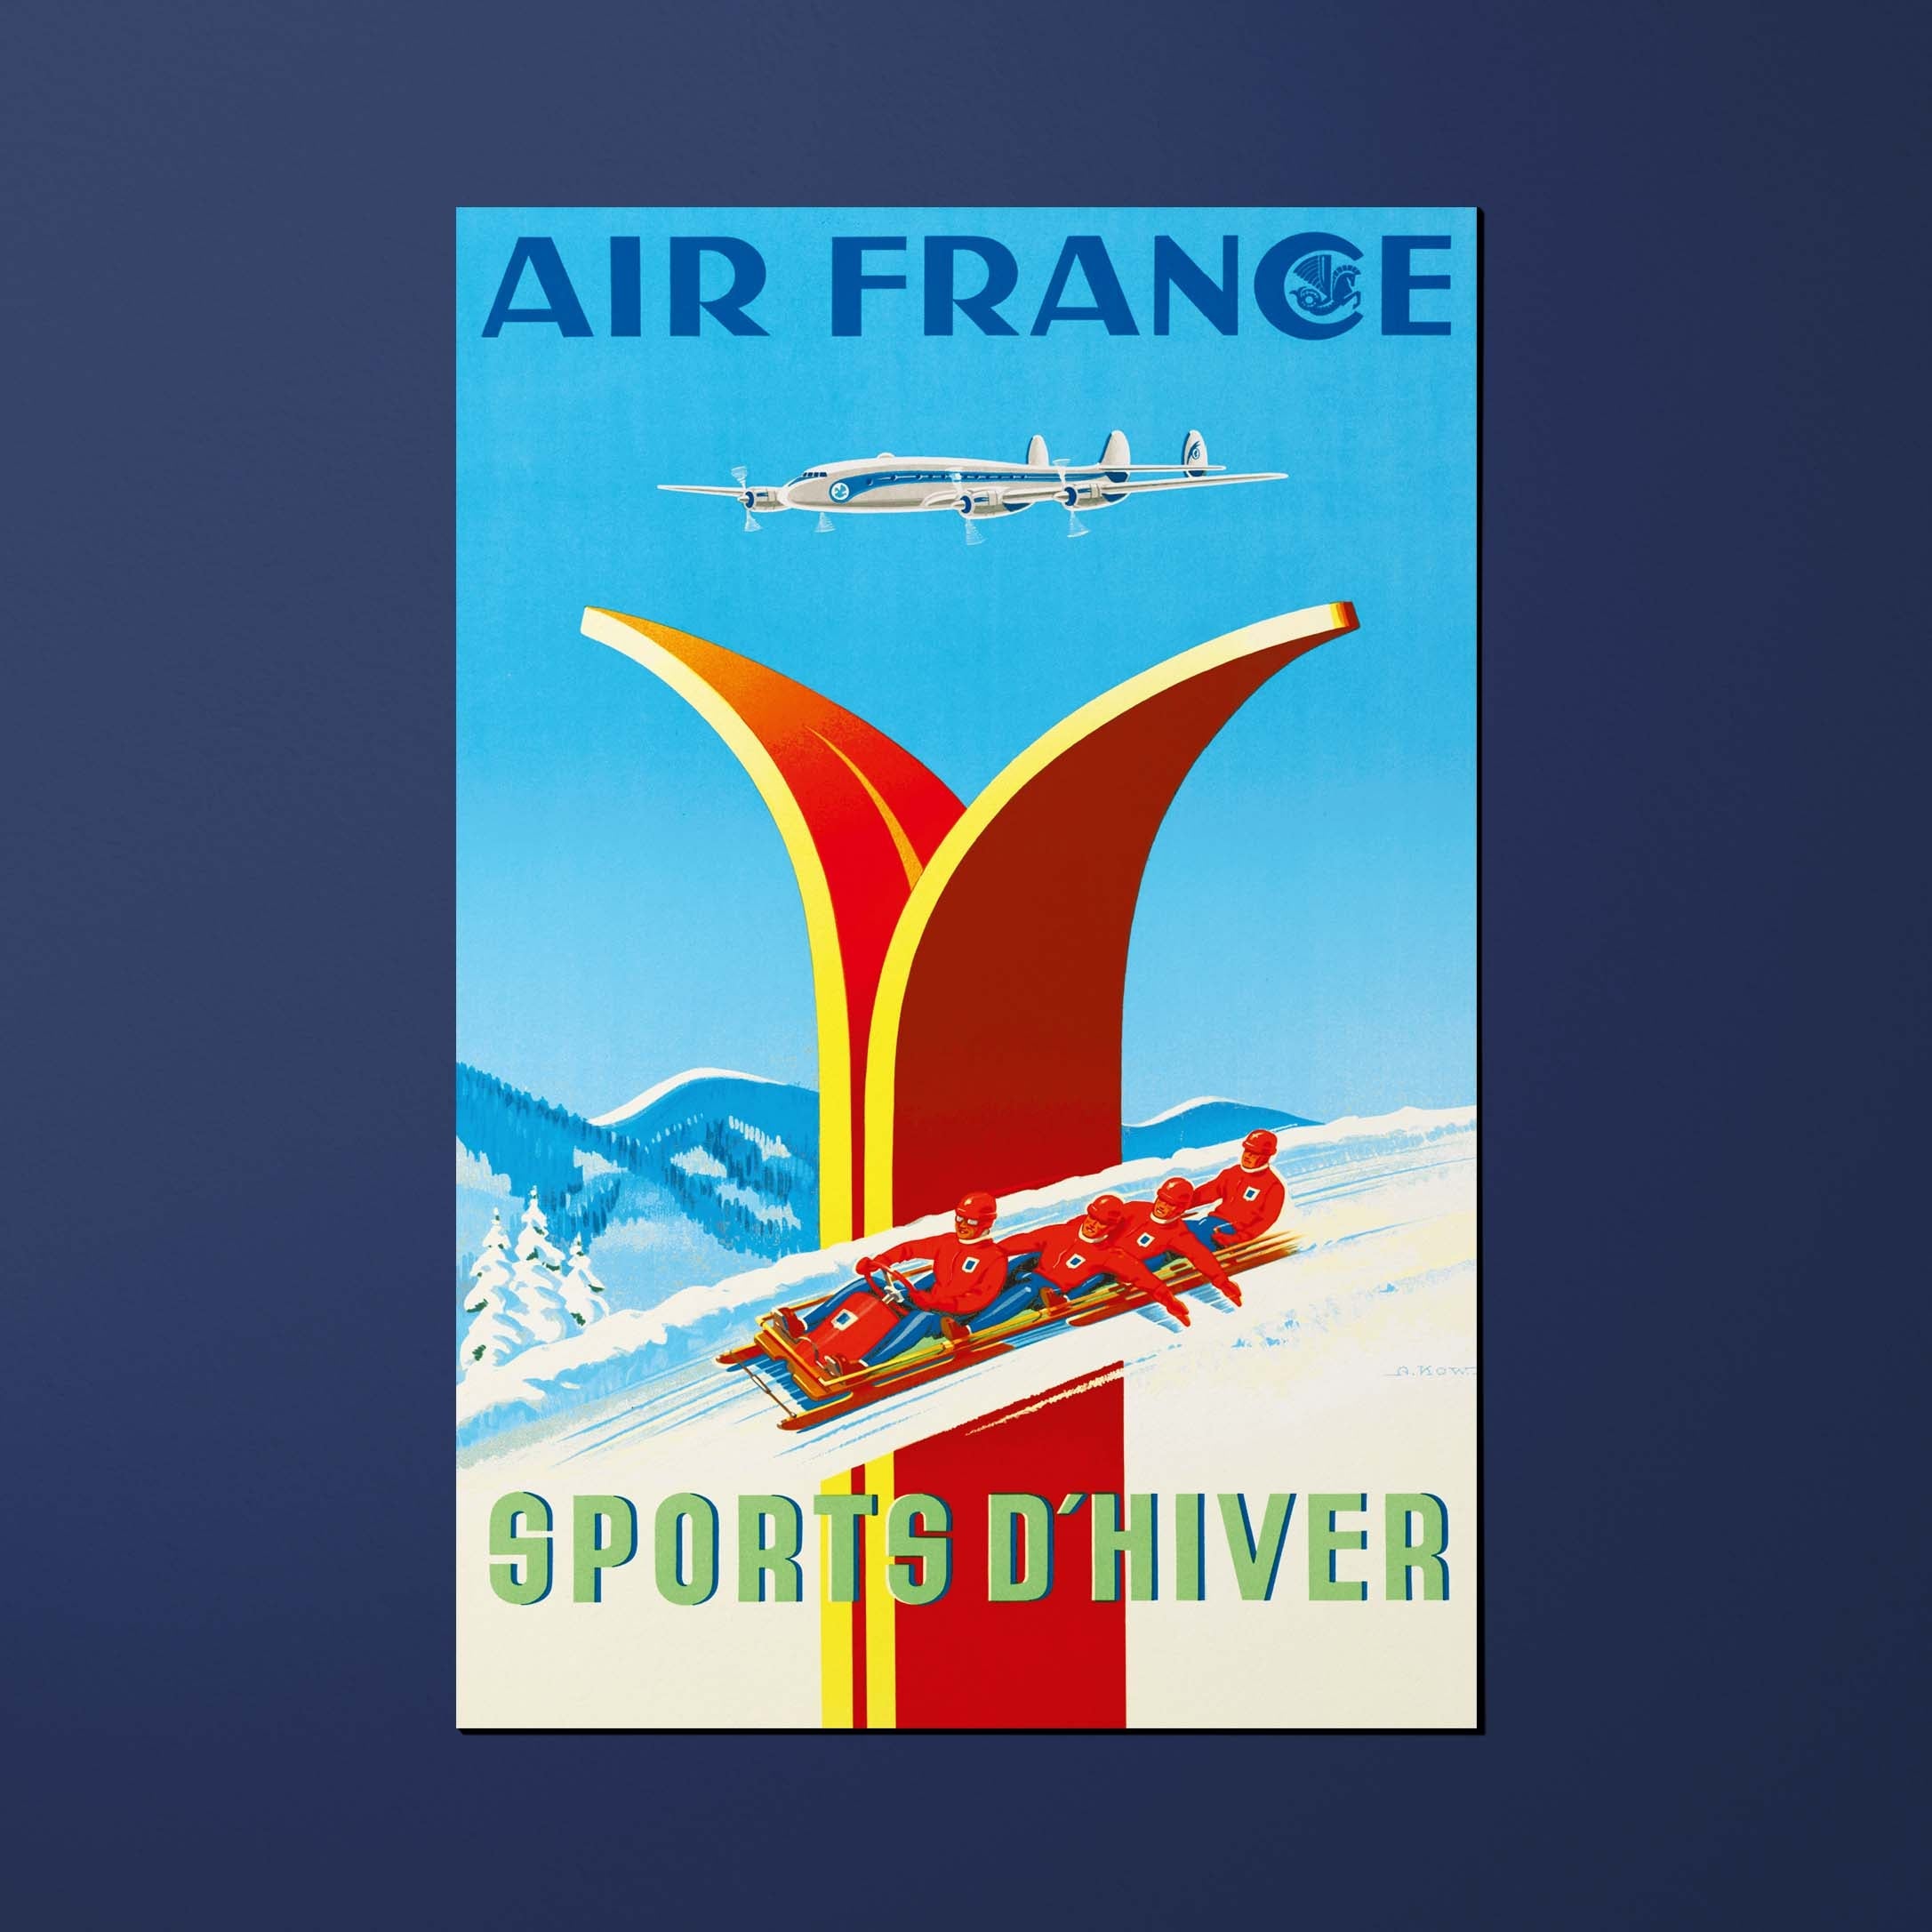 Carte postale Air France Legend Sports d'hiver, bobsleigh